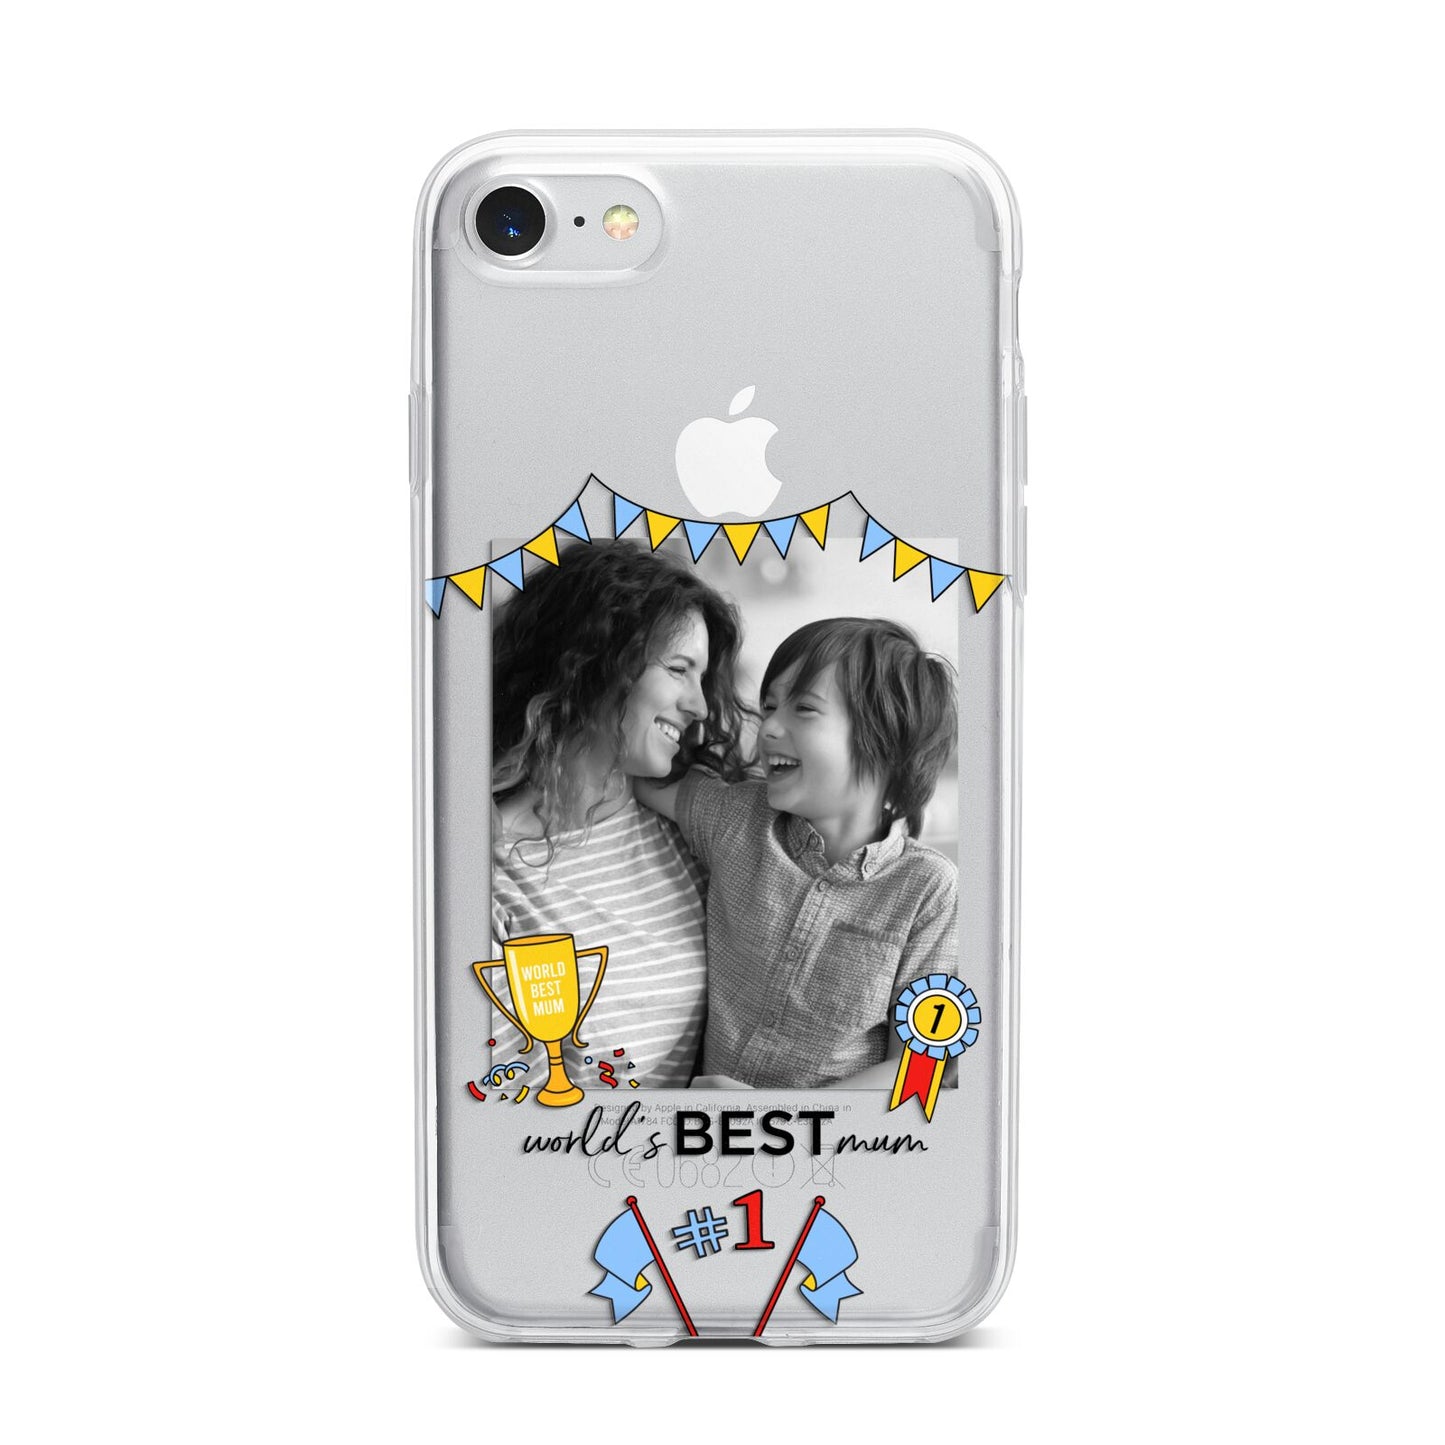 Worlds Best Mum iPhone 7 Bumper Case on Silver iPhone